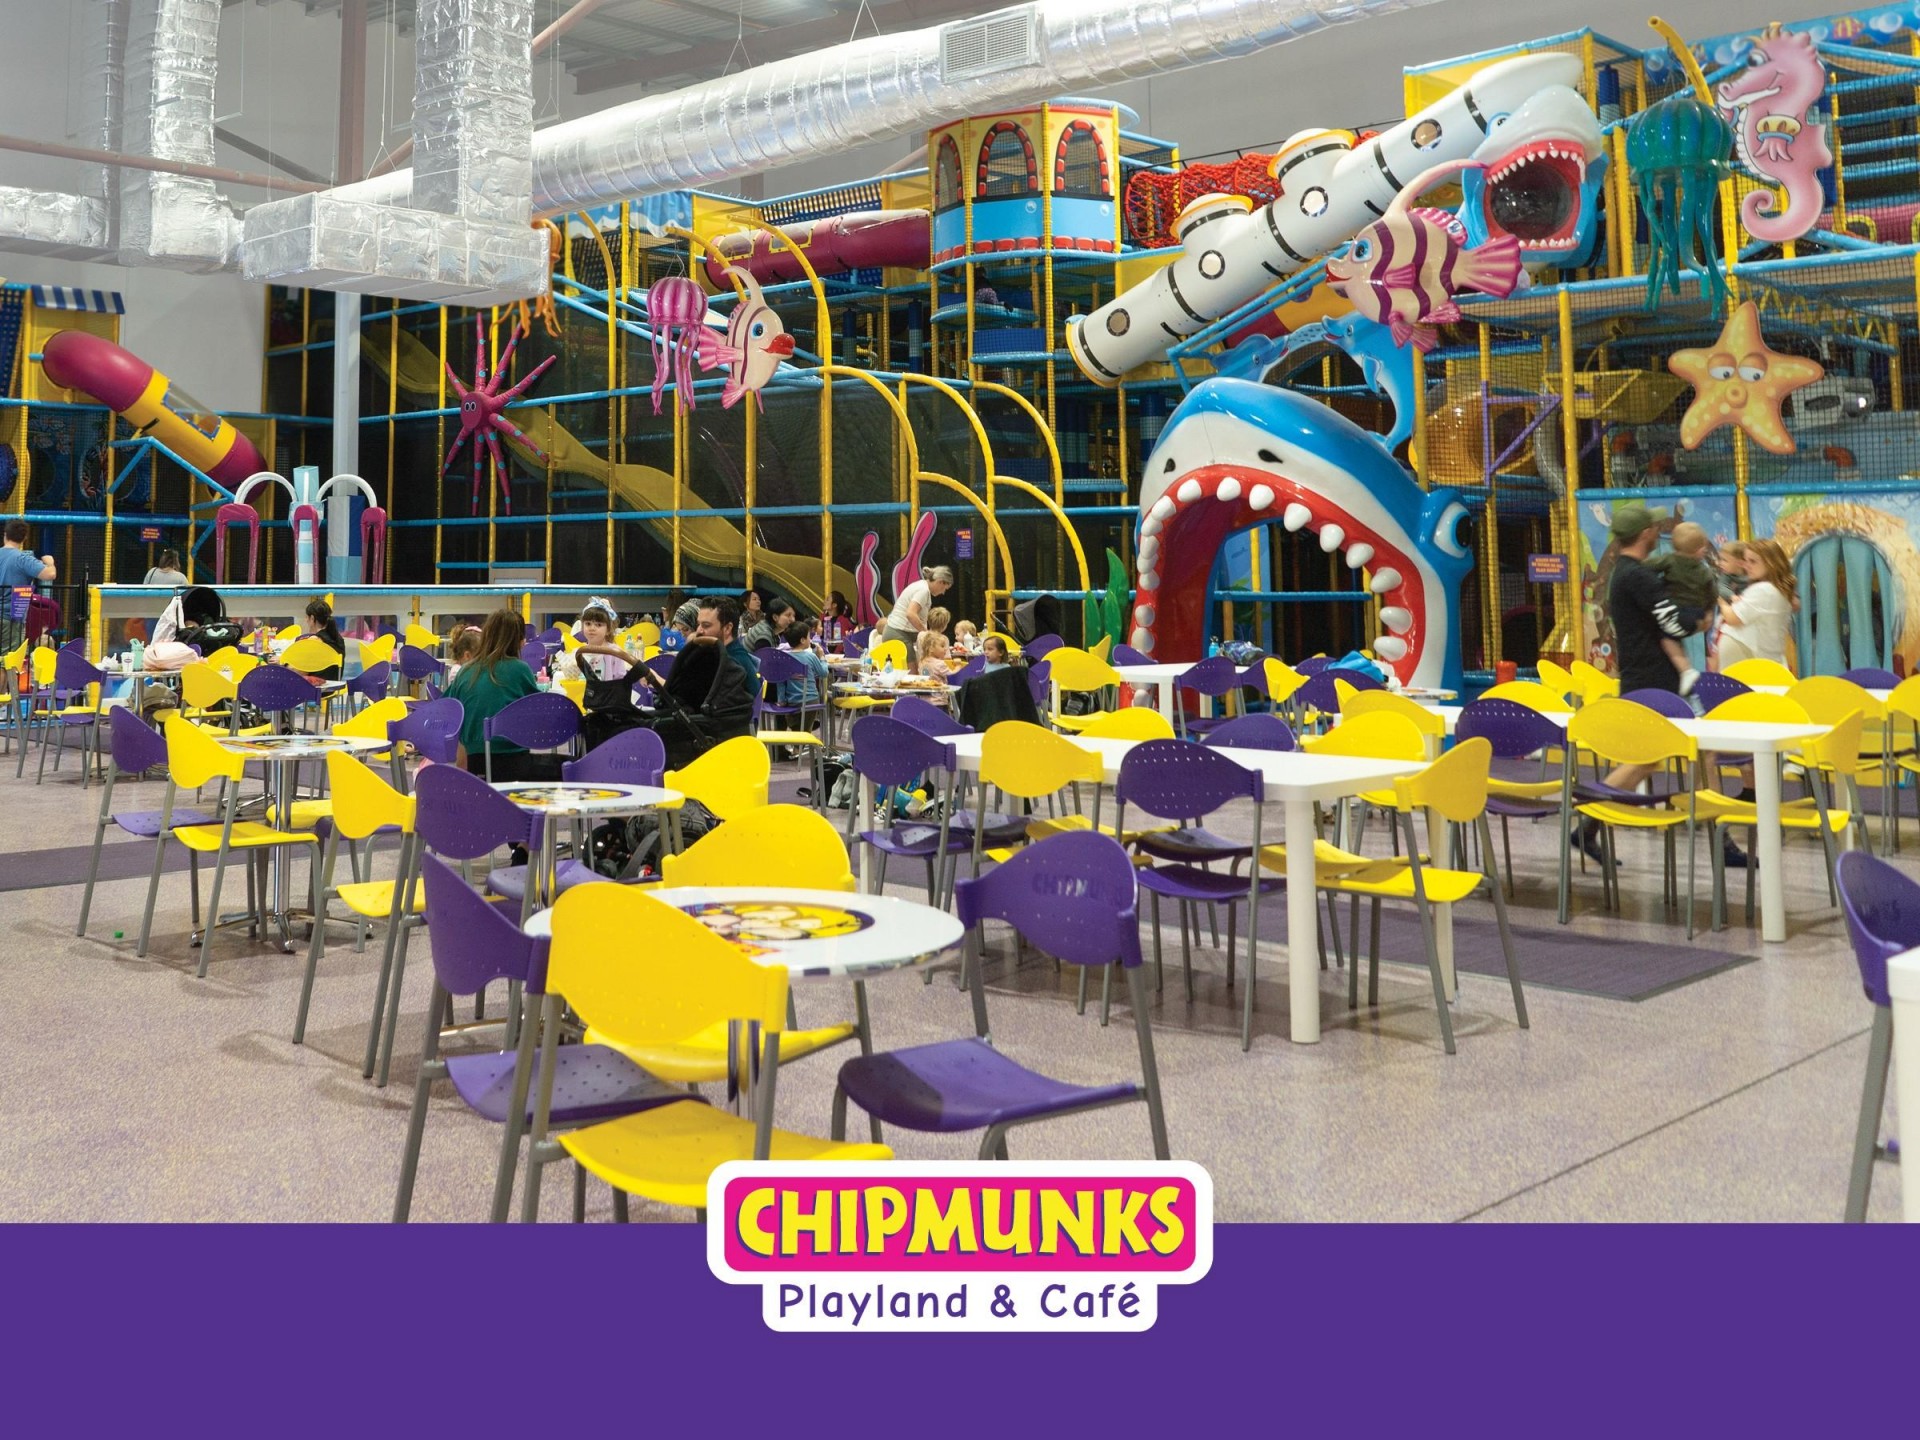 Chipmunks indoor playground franchise for sale - Osborne Park...